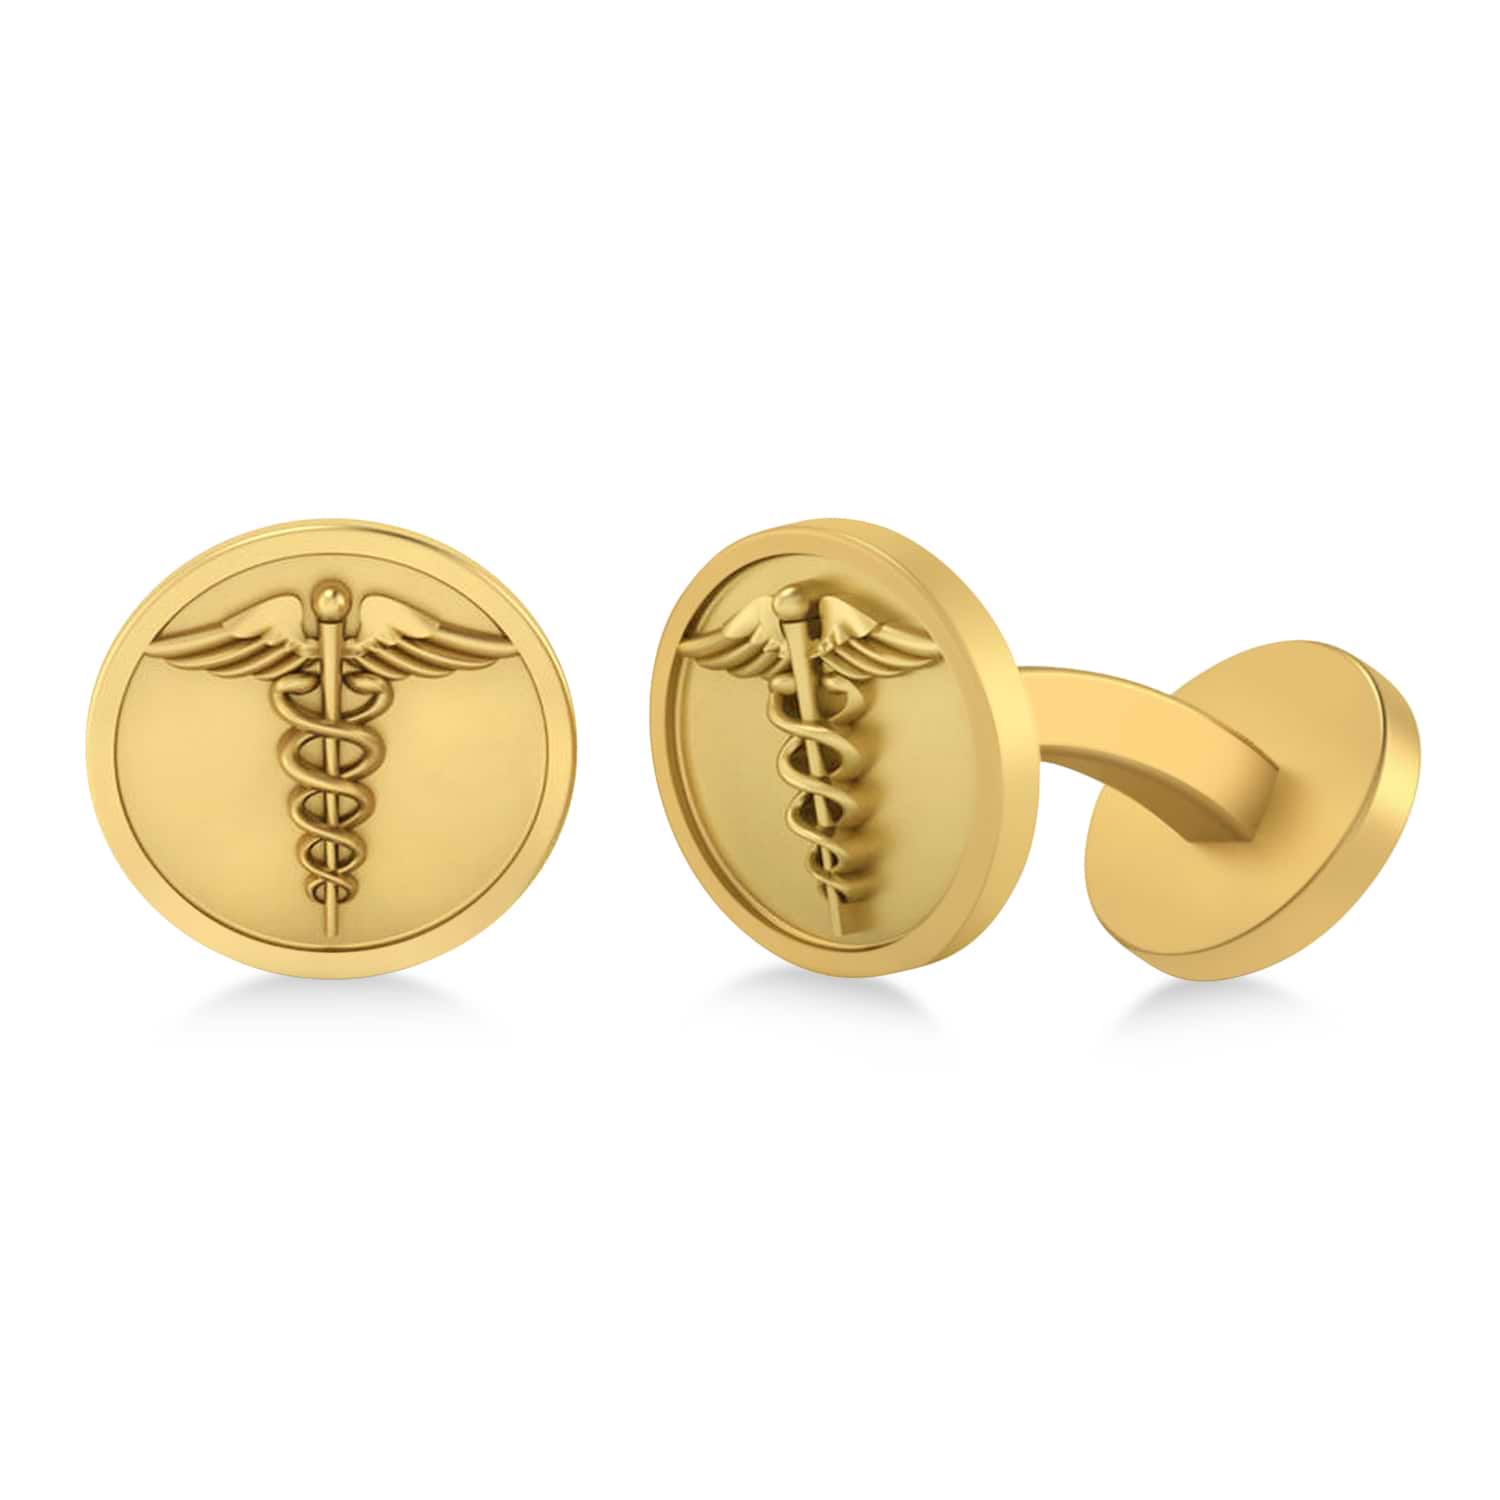 Men's Caduceus Medical Symbol Cufflinks 14k Yellow Gold